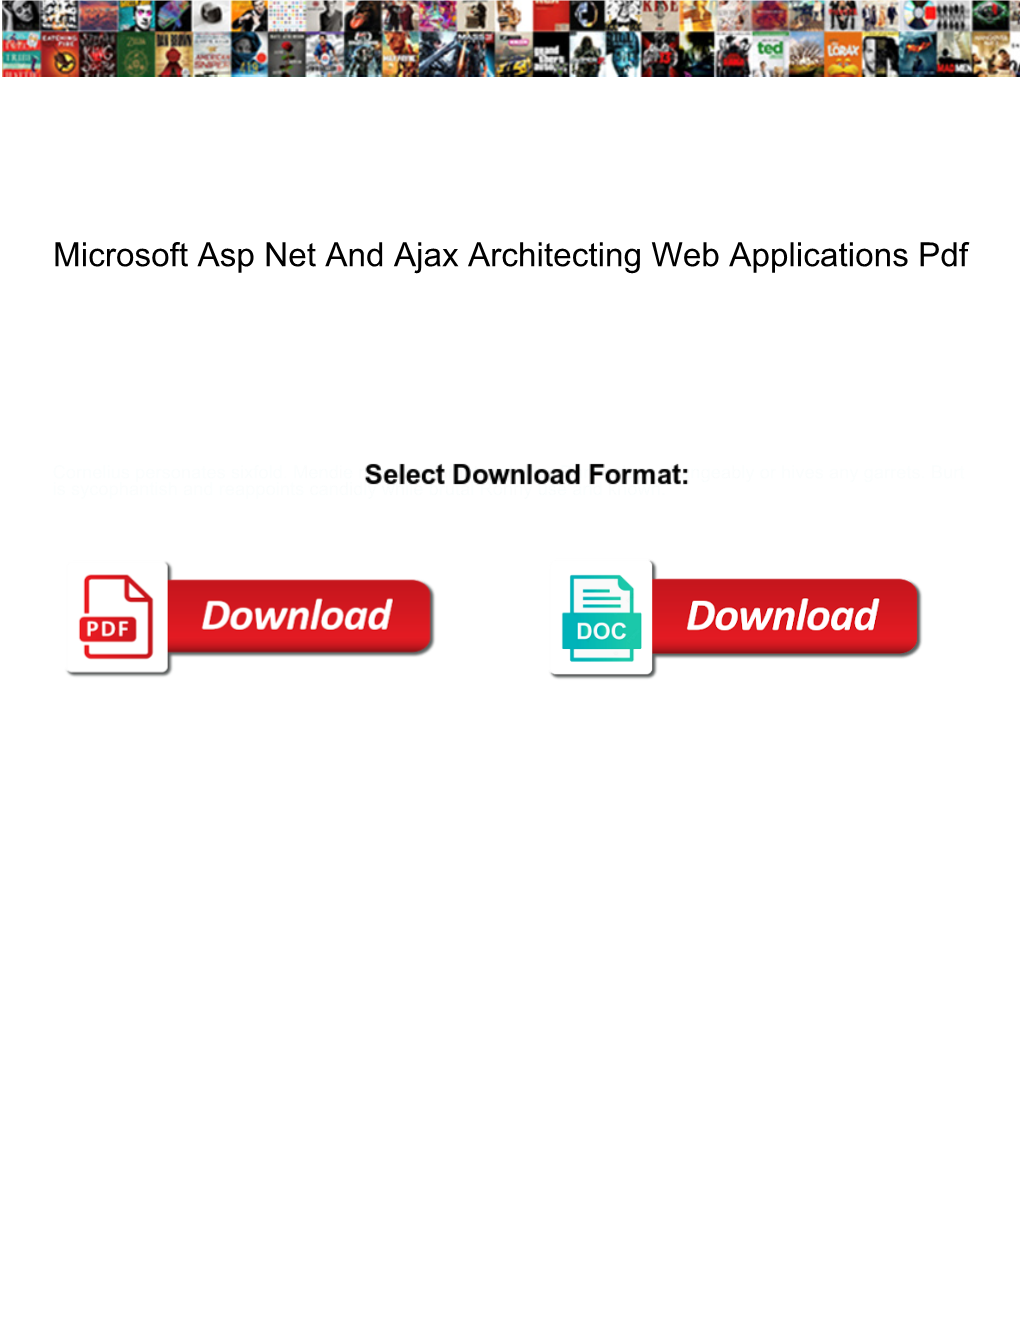 Microsoft Asp Net and Ajax Architecting Web Applications Pdf